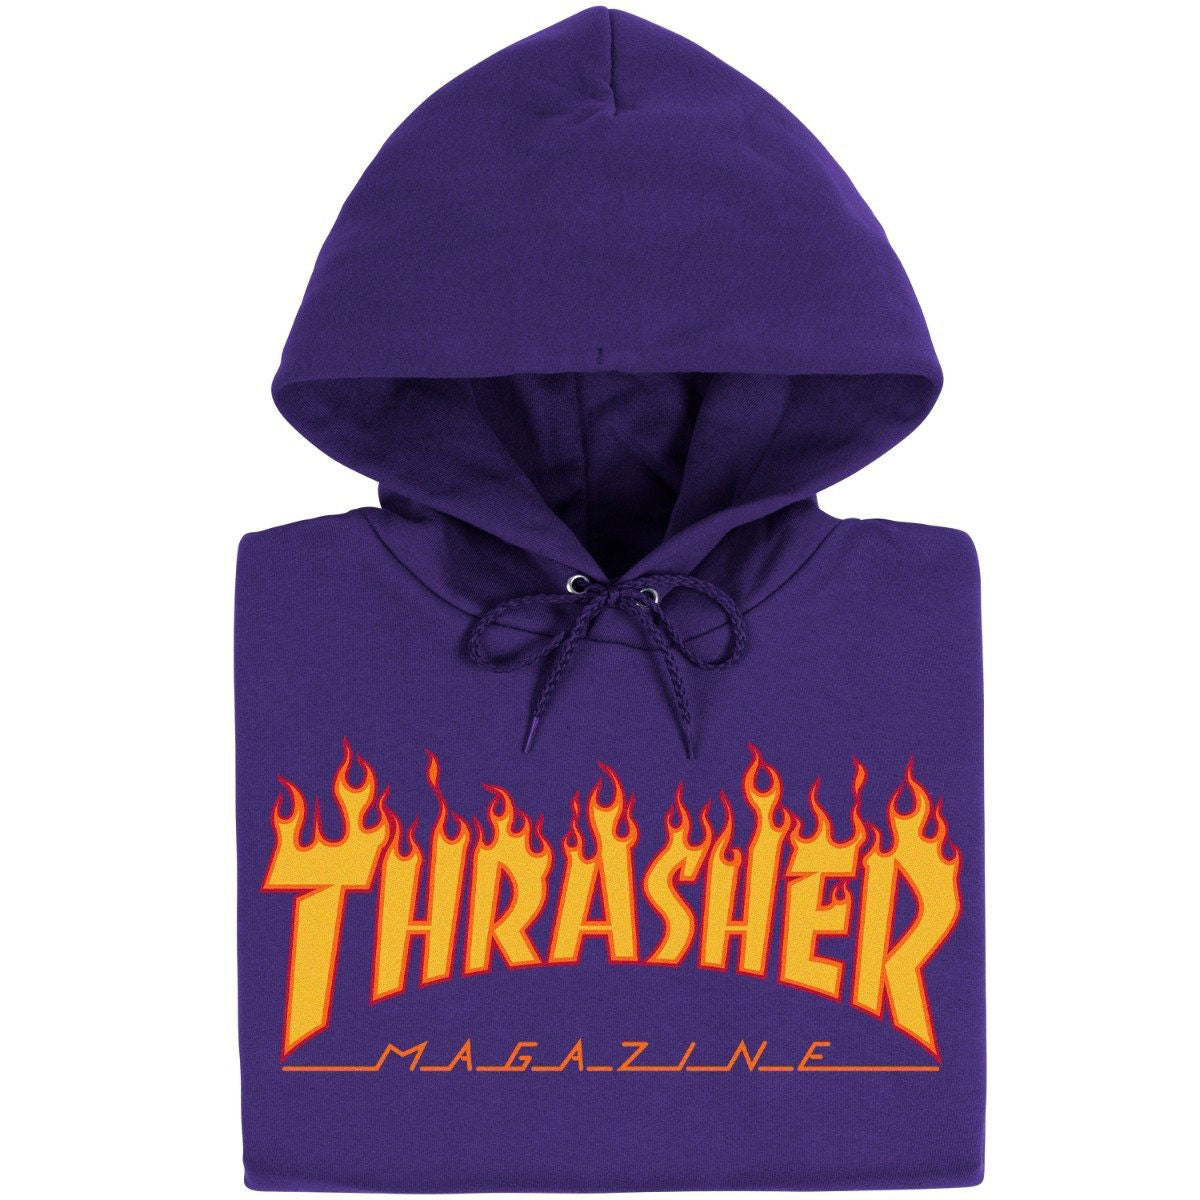 Thrasher Hoodie Flame HD Wmn (black)